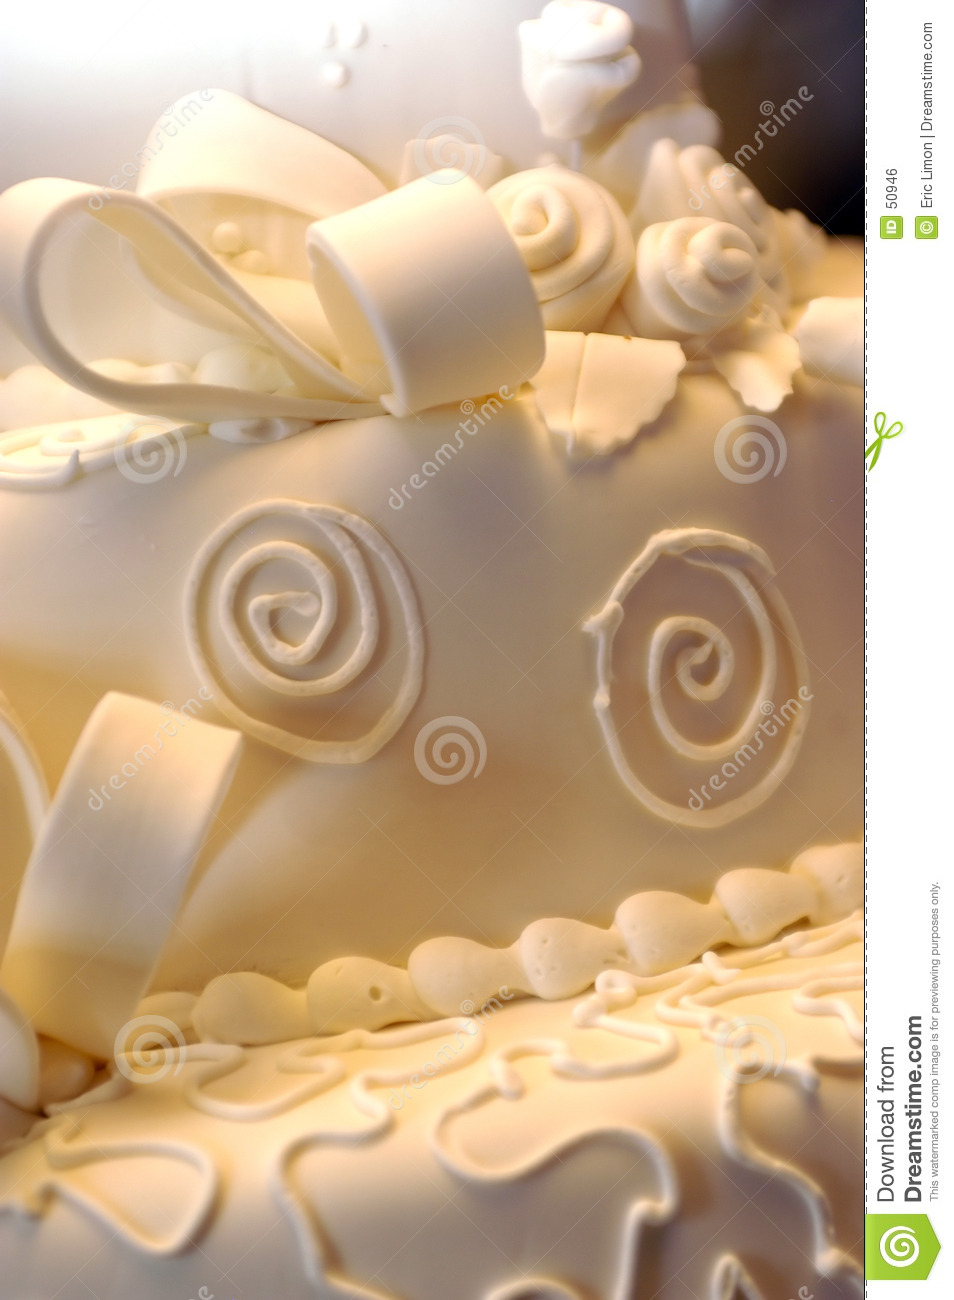 Free Stock Photos Close-Ups of Wedding Cakes